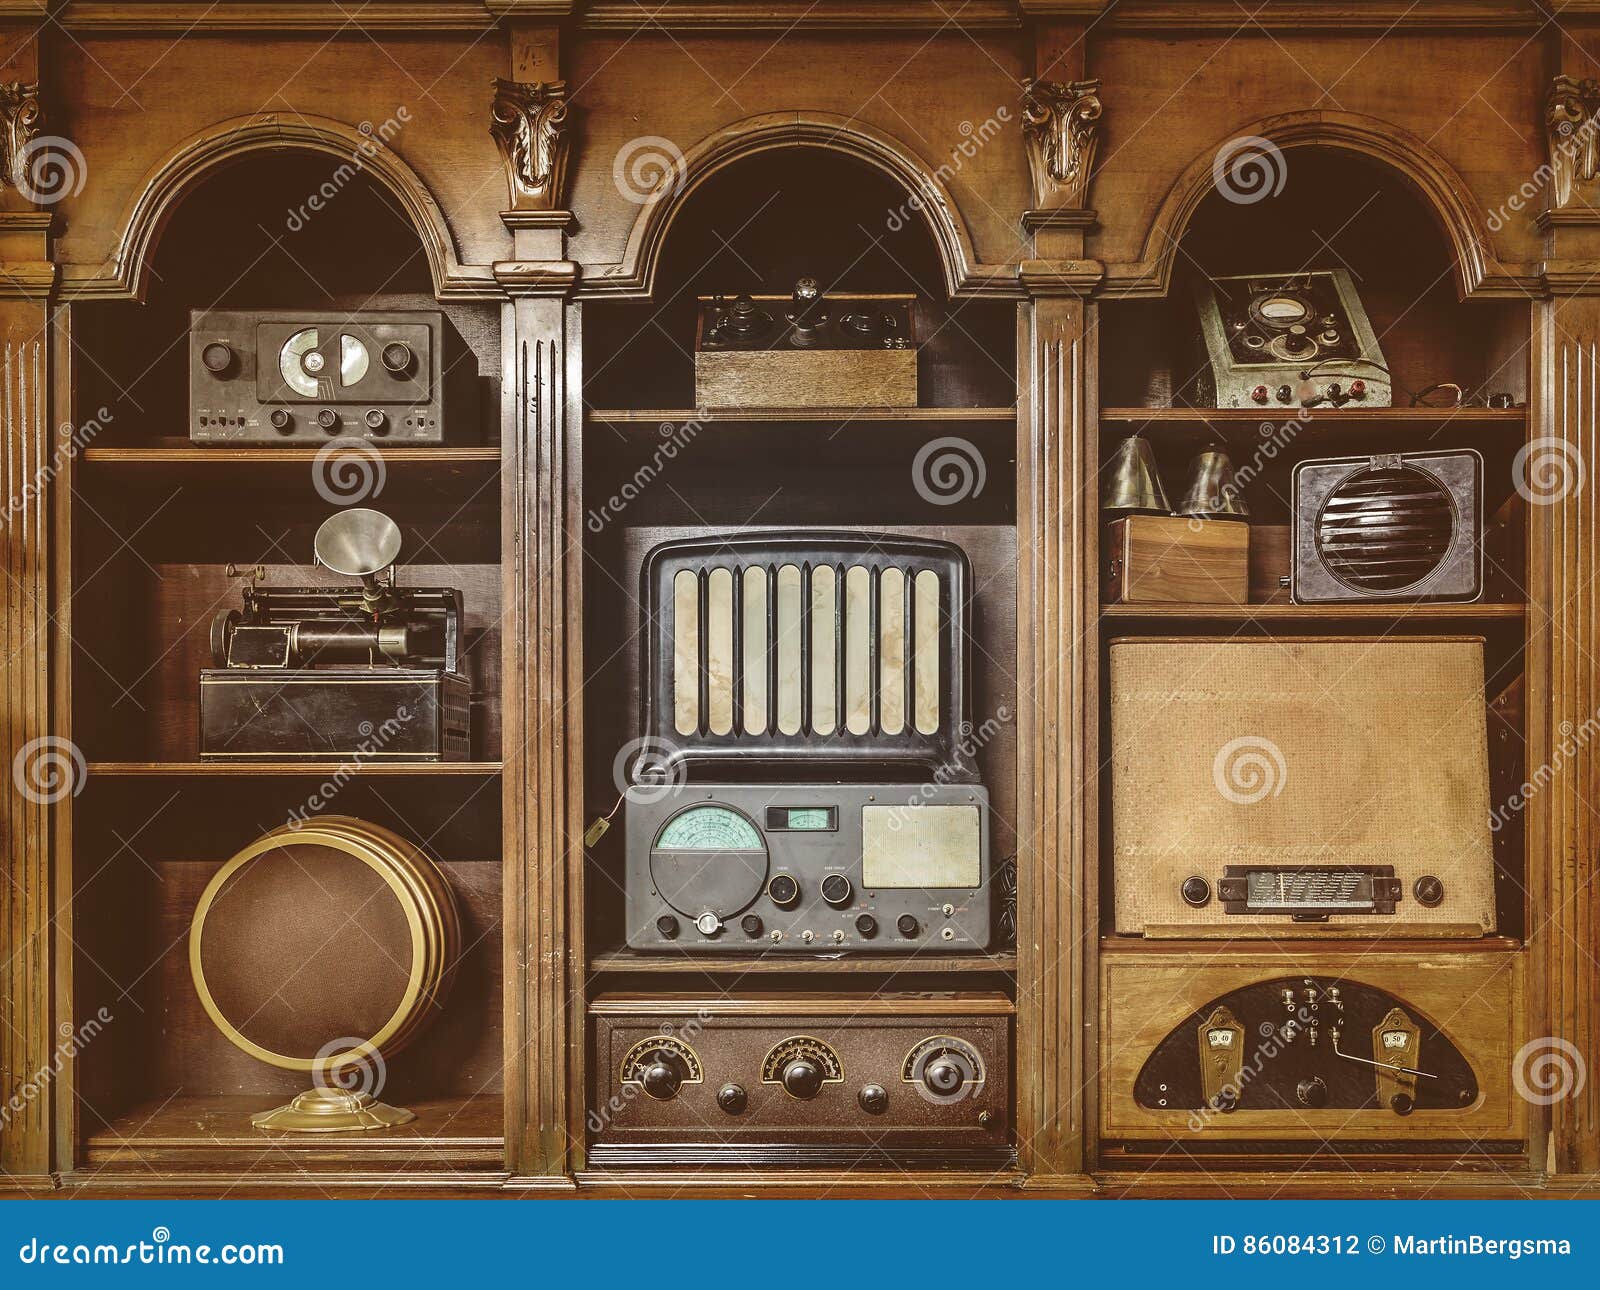 Sepia Toned Image Of Old Radio S Stock Photo Image Of Music